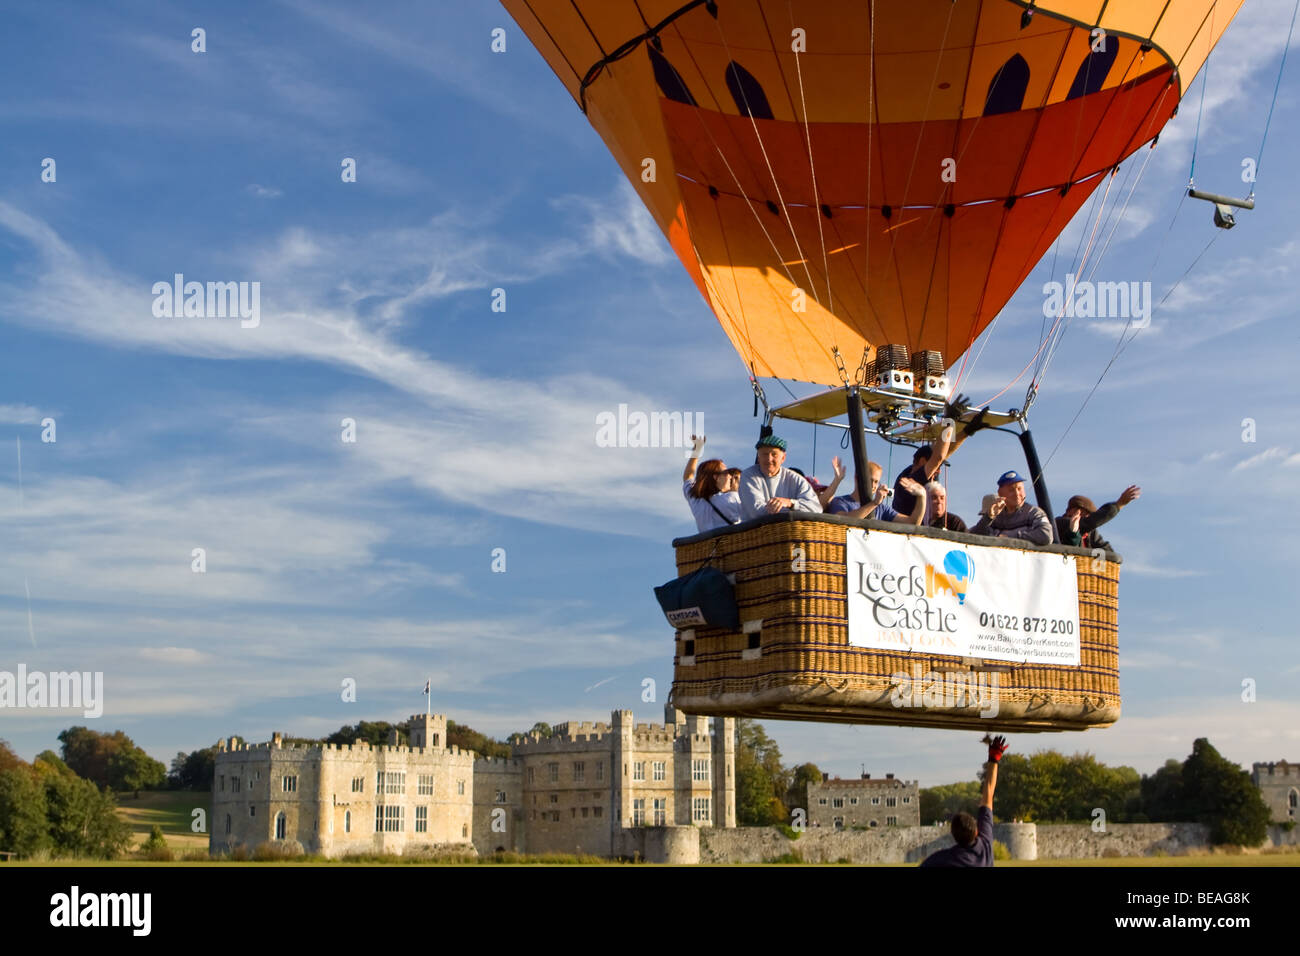 Hot Air Ballooning at Leeds Castle Stock Photo